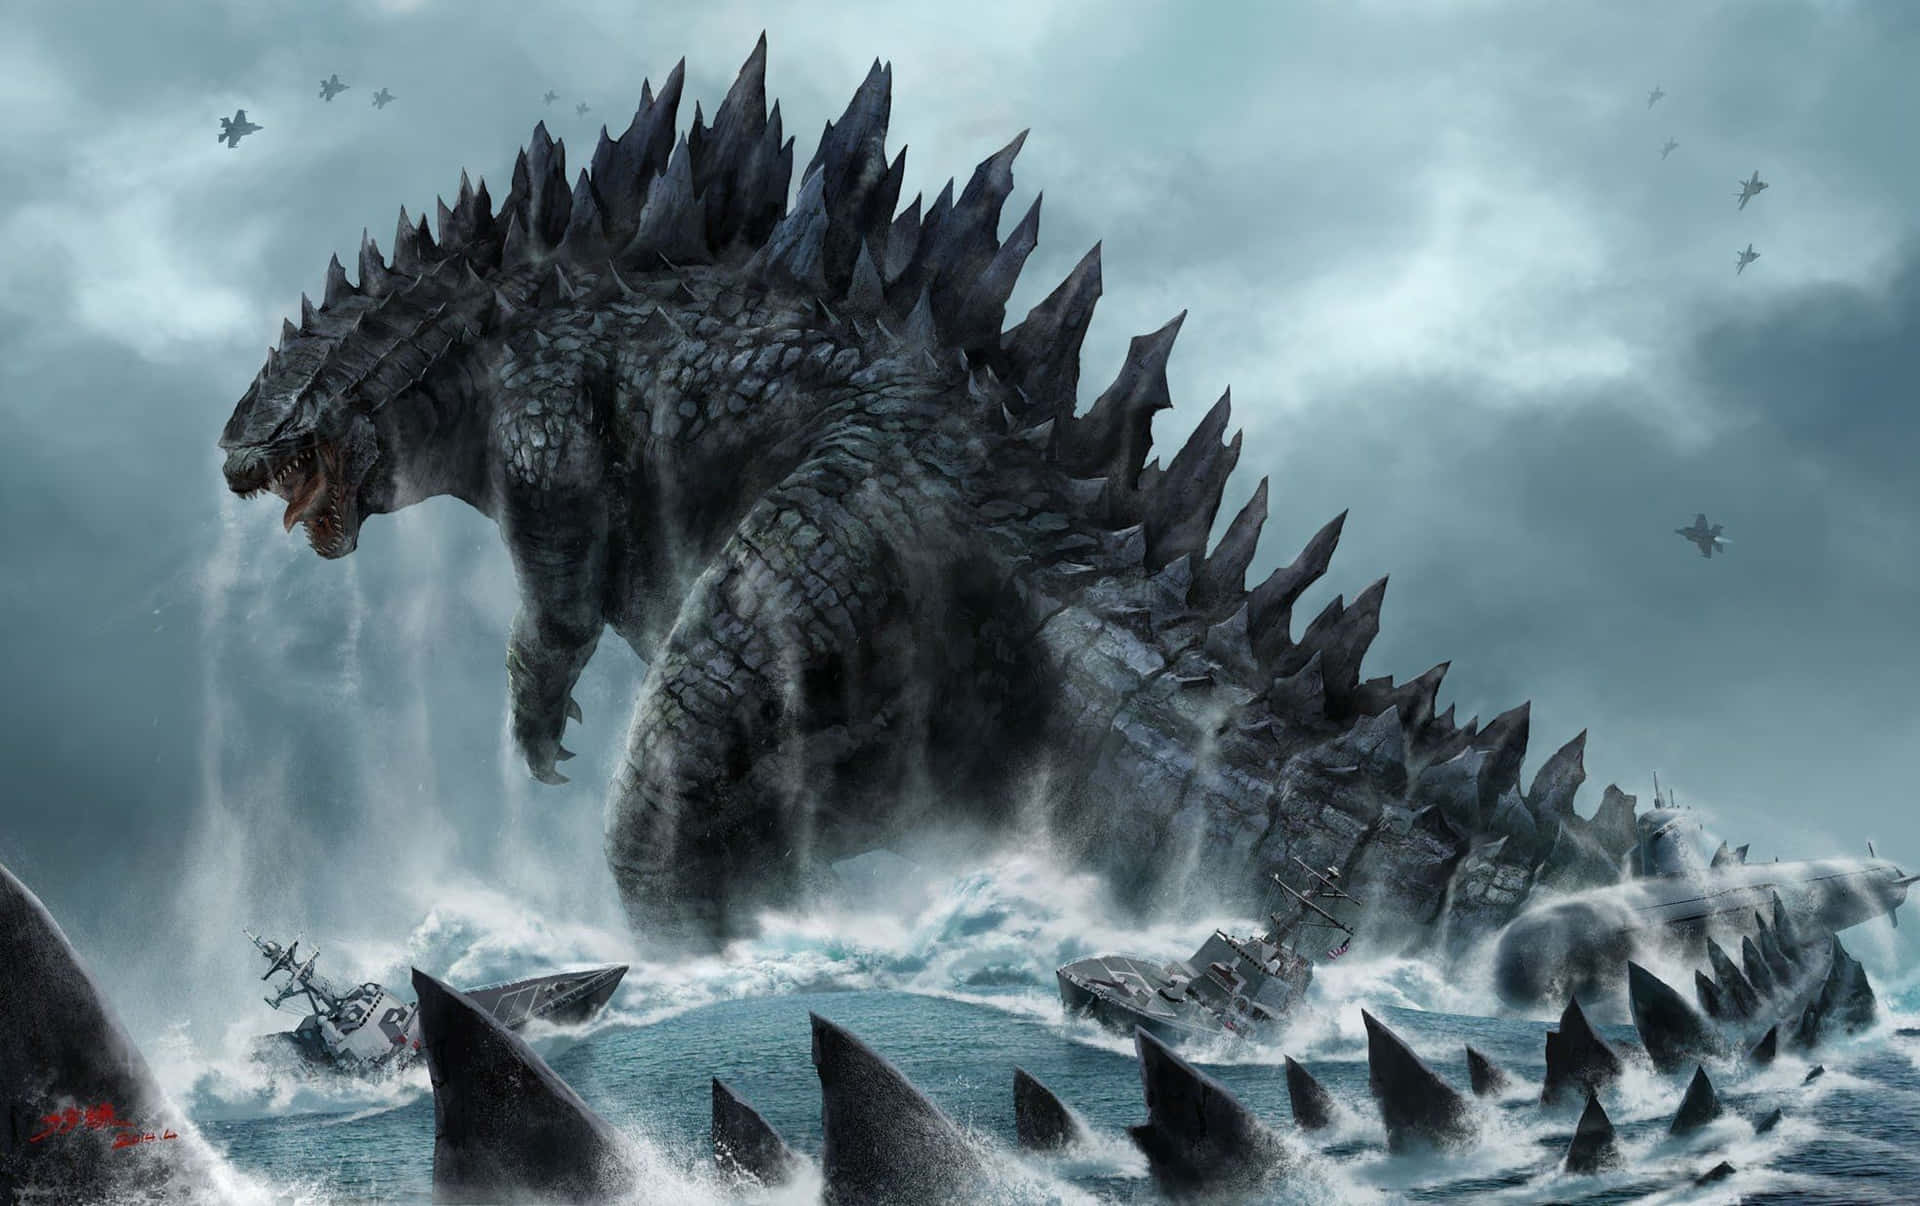 Cool Godzilla Attack In The Ocean Wallpaper